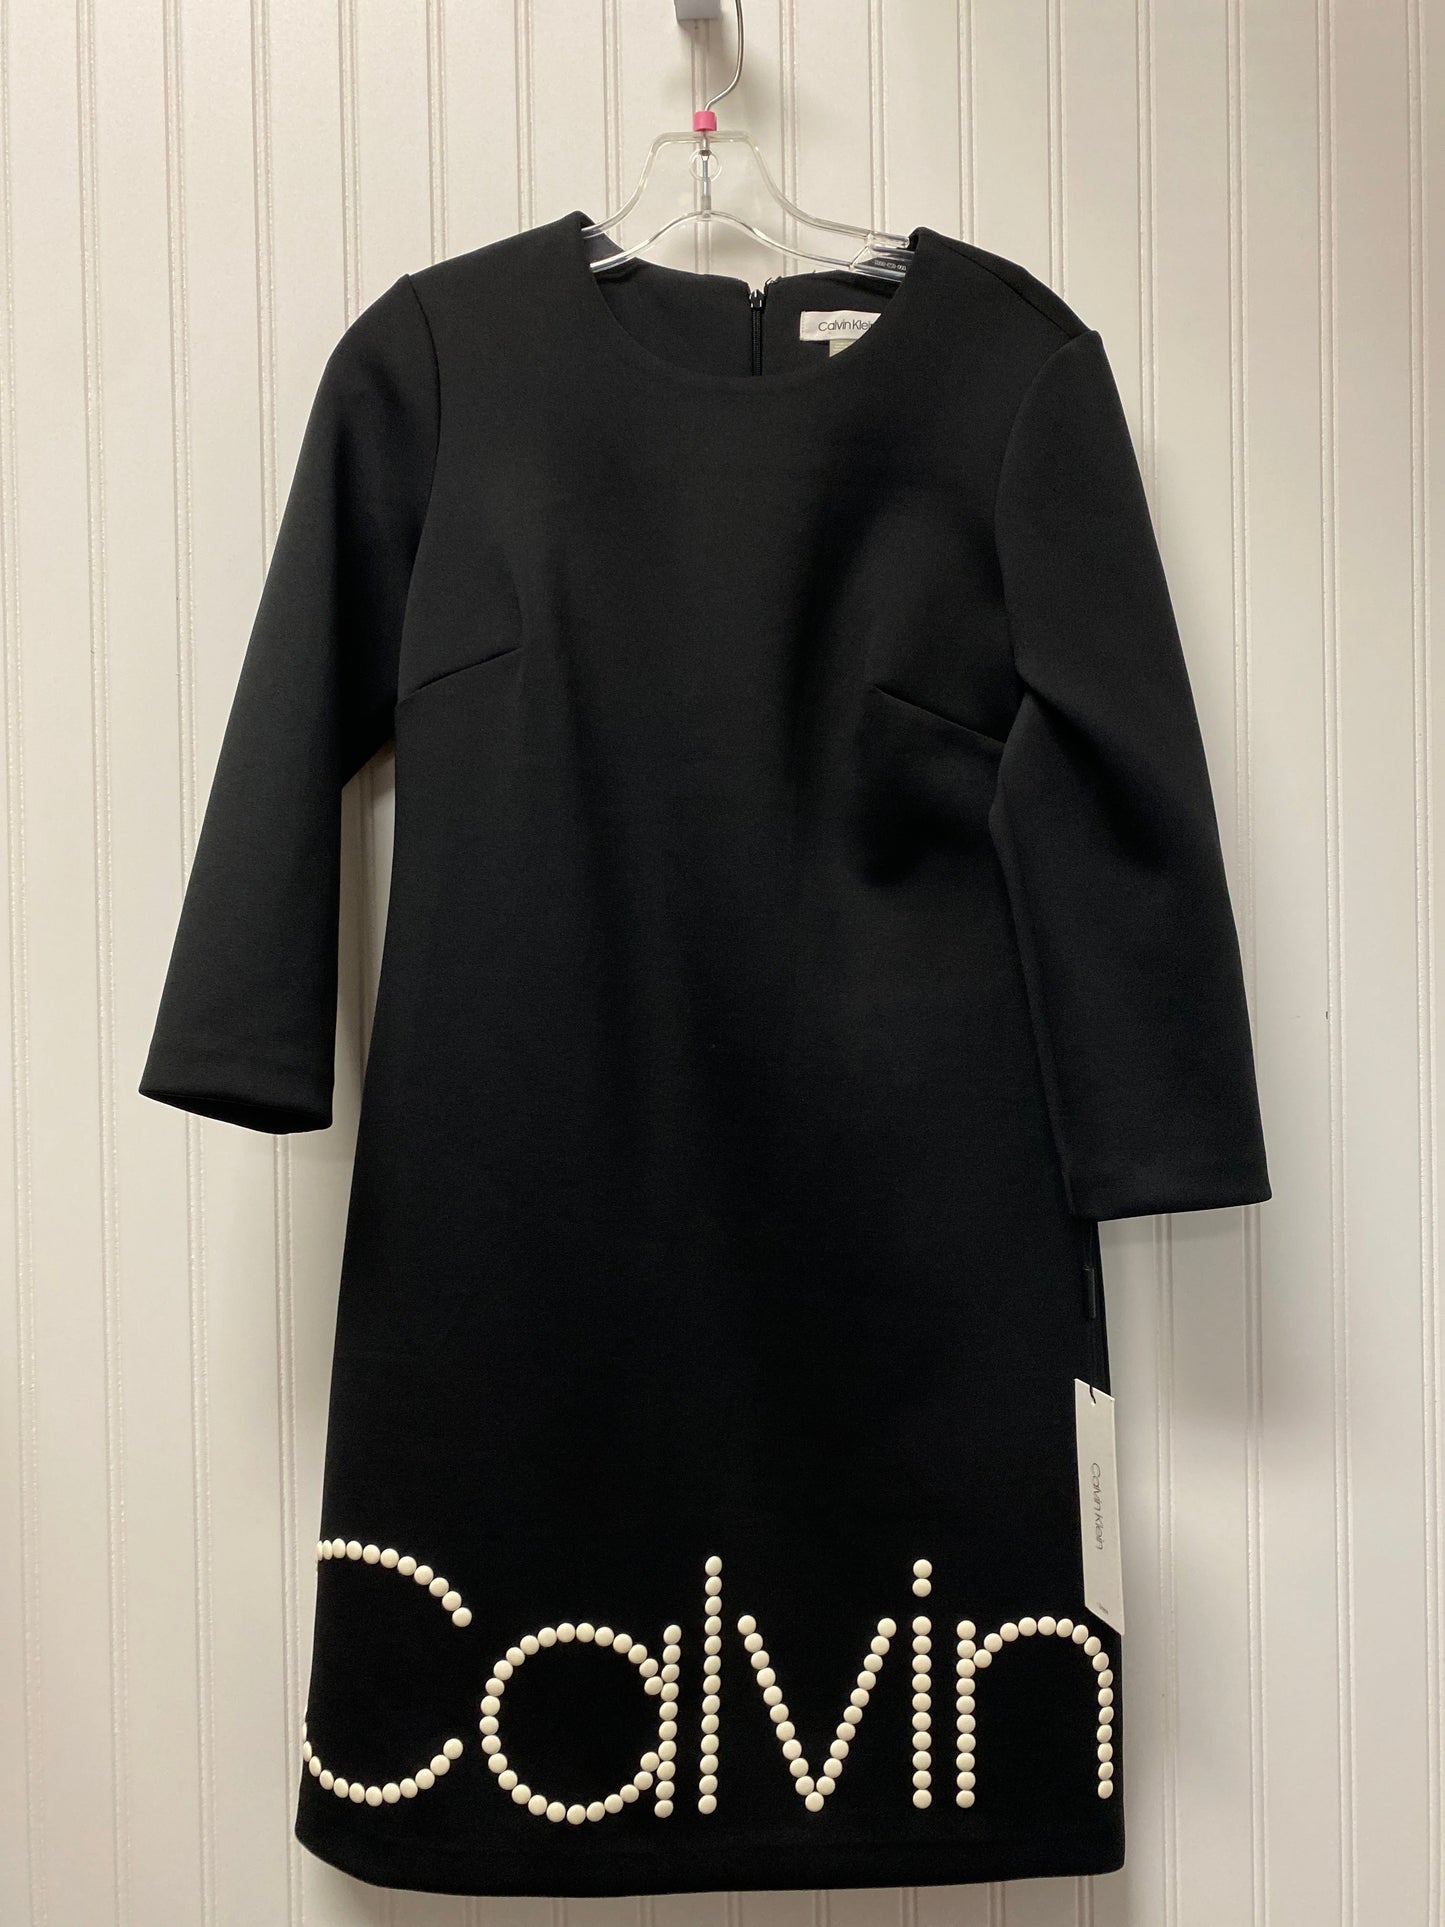 Black & White Dress Work Calvin Klein, Size S